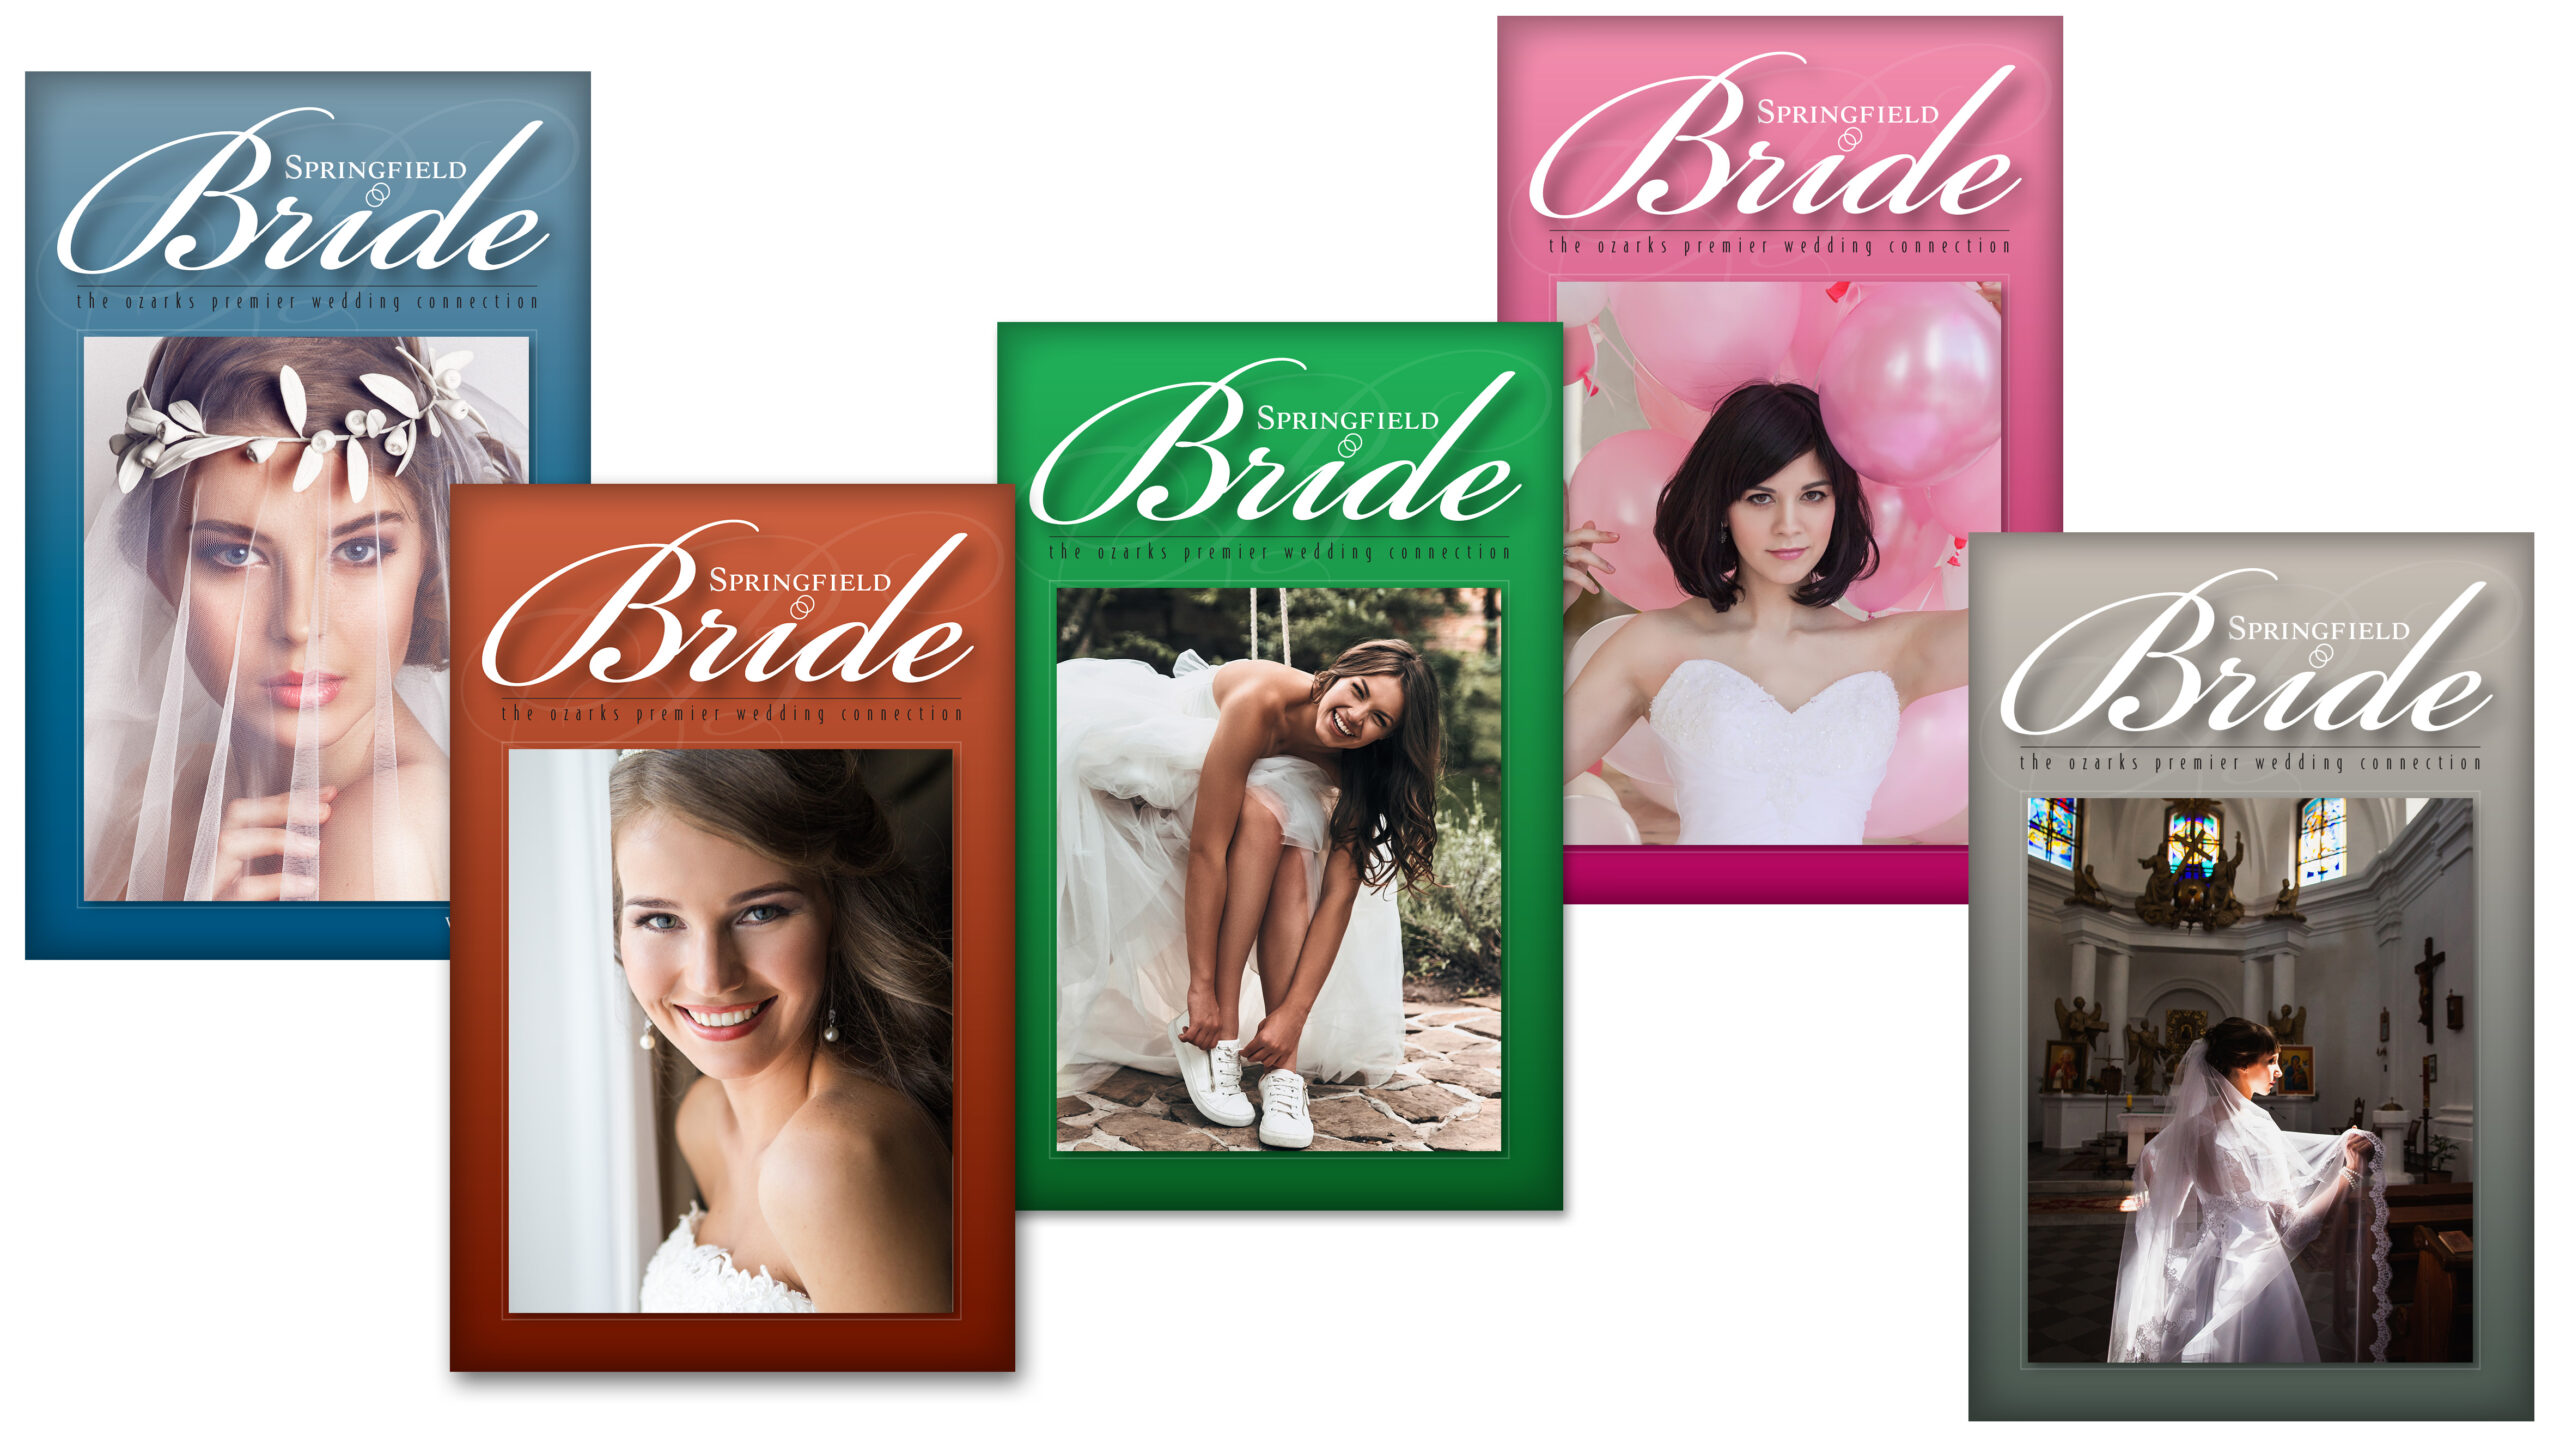 Springfield Bride magazine covers